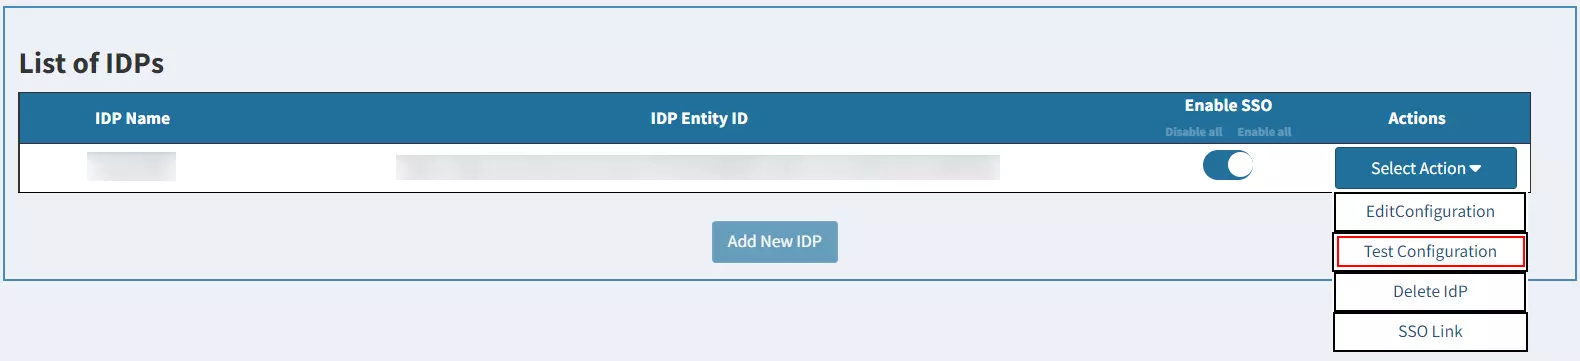 nopCommerce Single Sign-On (SSO) using miniOrange as IDP - Click on Test Configuration